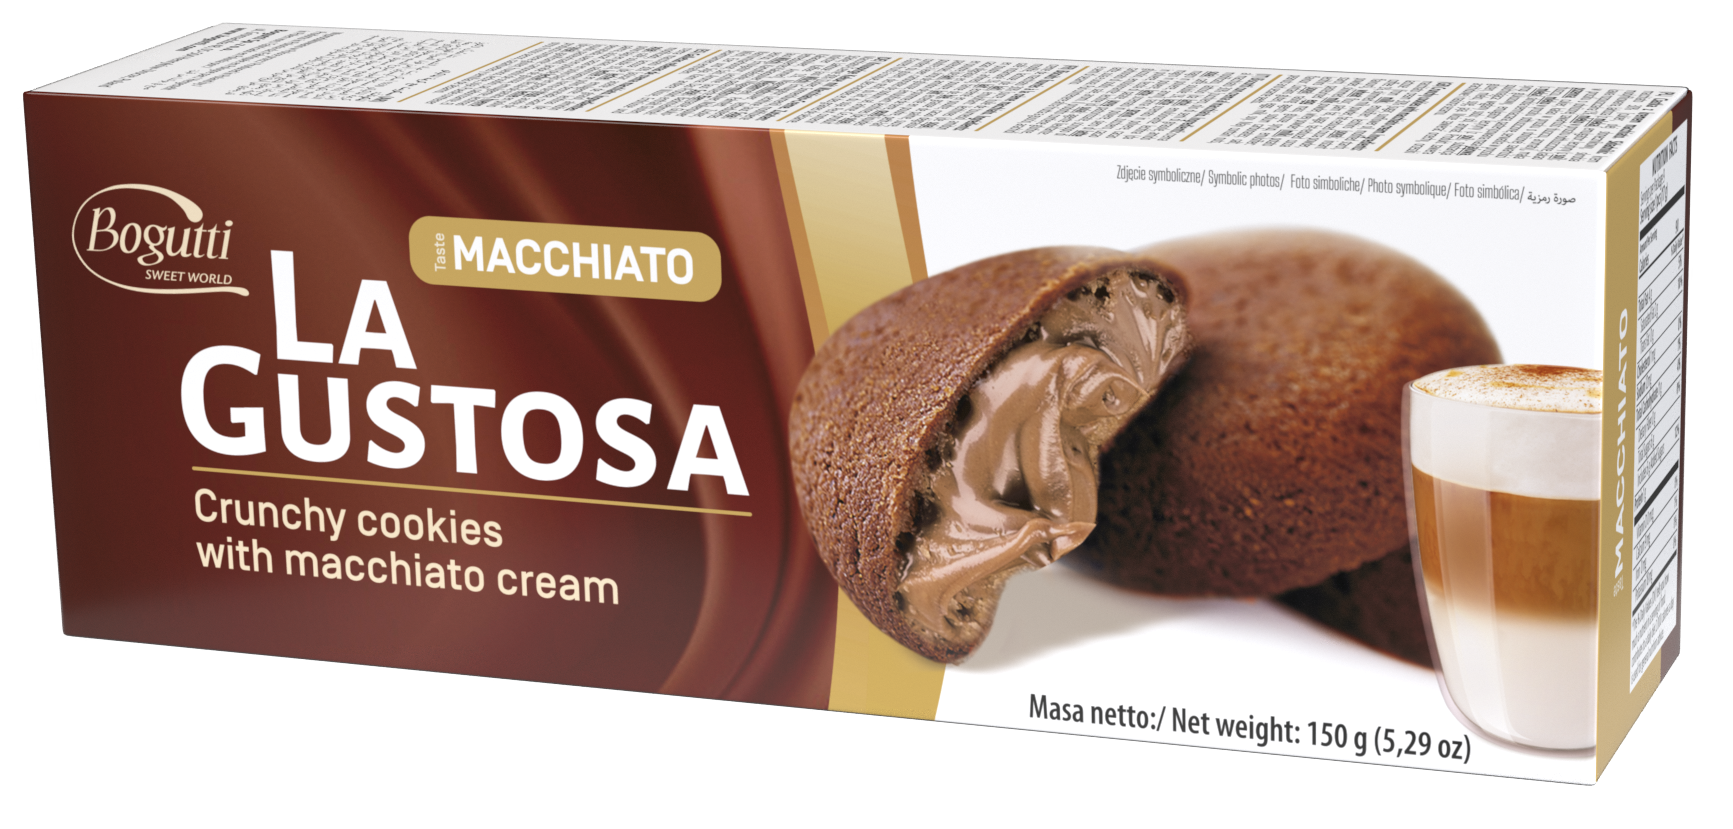 La Gustosa – Crunchy cookies with macchiato cream